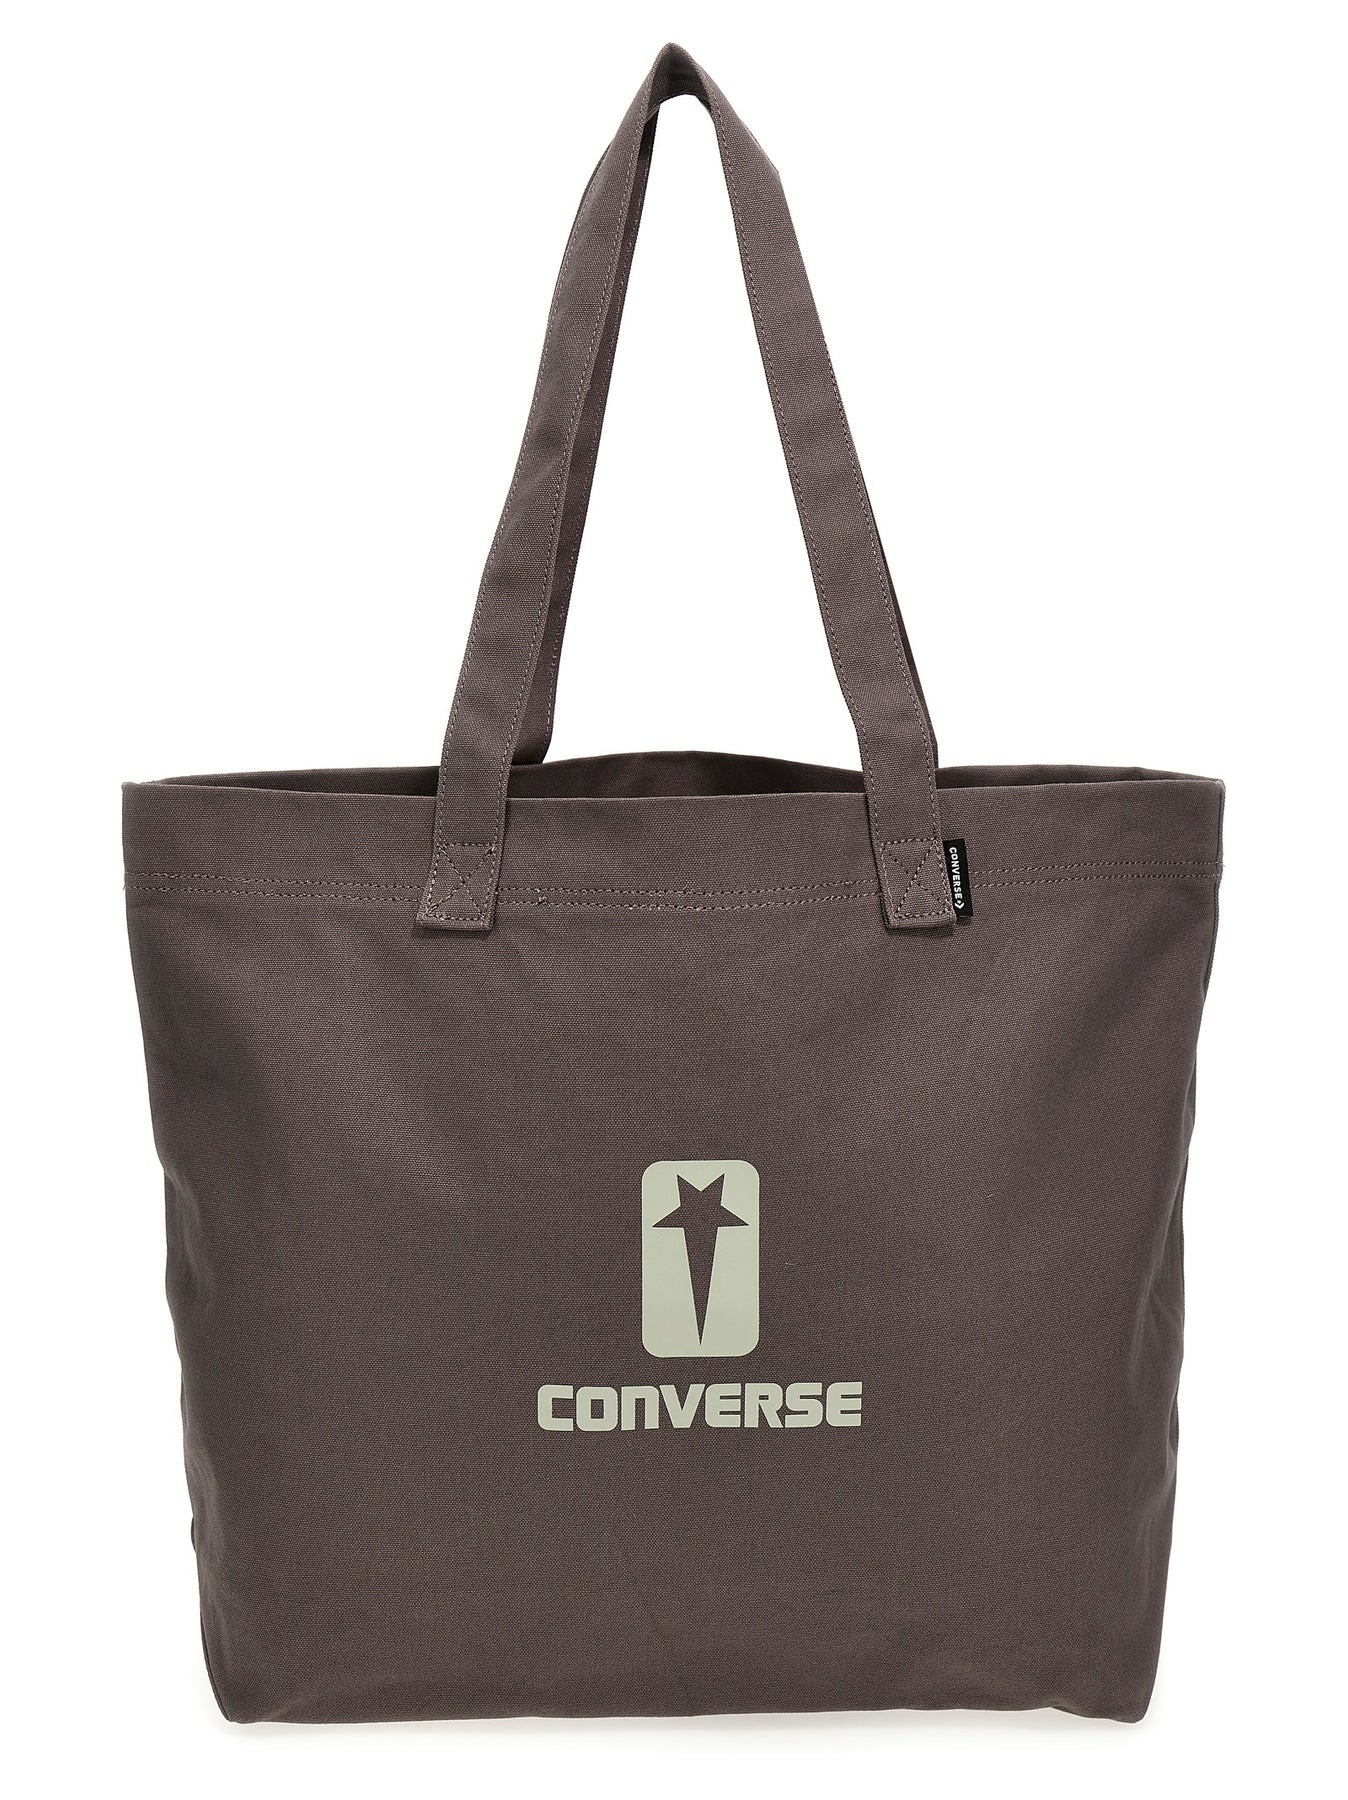 Drkshw X Converse Shopping Shopper Tote Bag Gray - 1